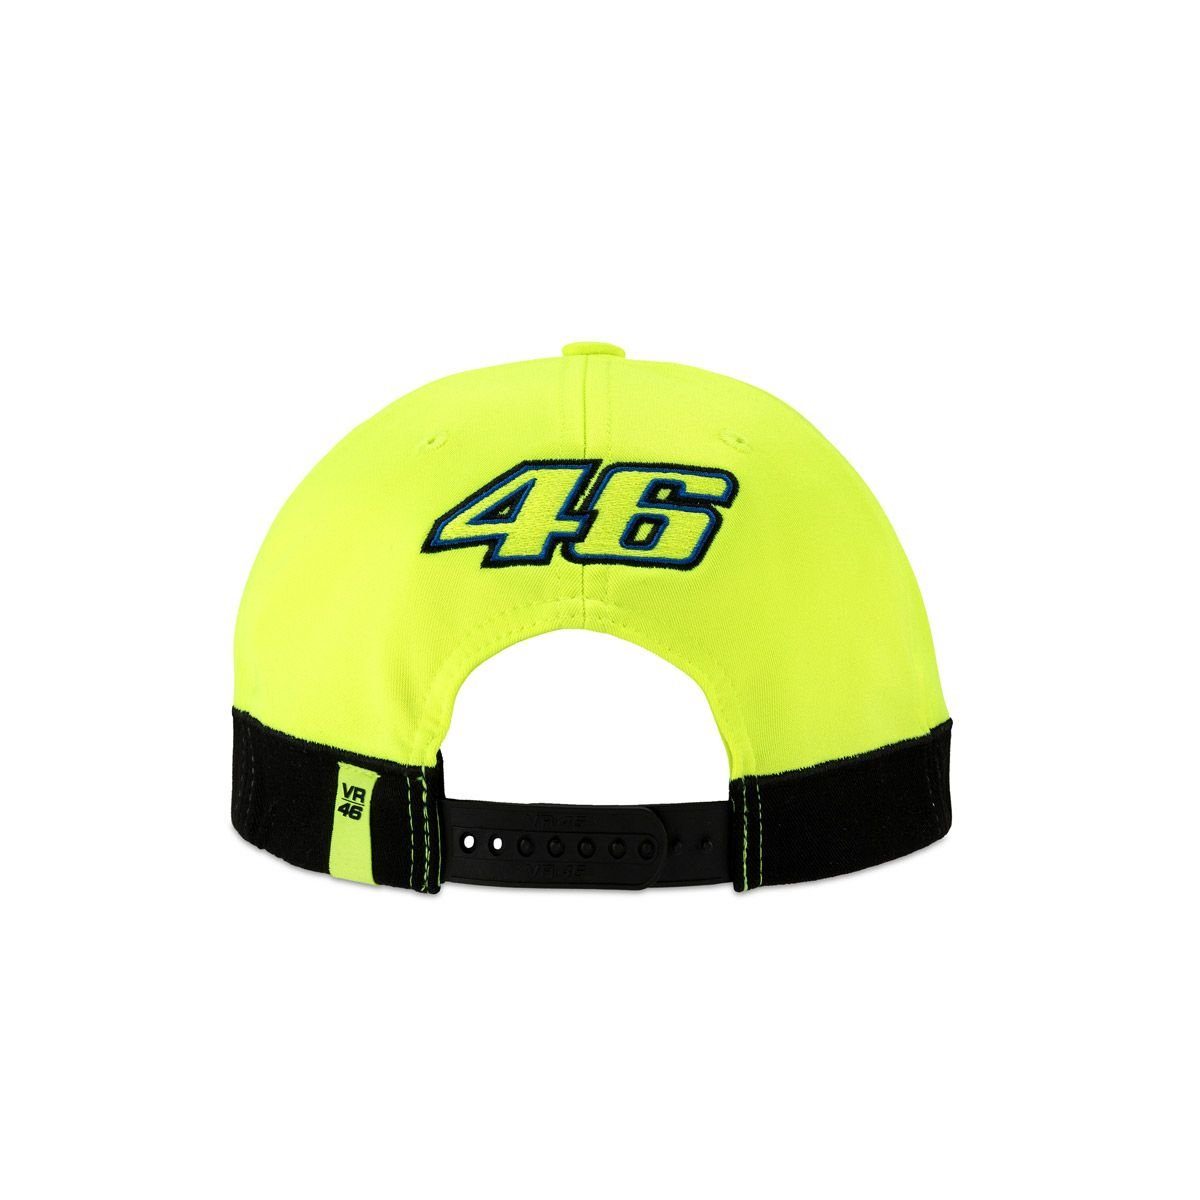 Rossi Größenverstellbar Cap Baseball Valentino (Schwarz/Neon-Gelb) Cupolino VR46